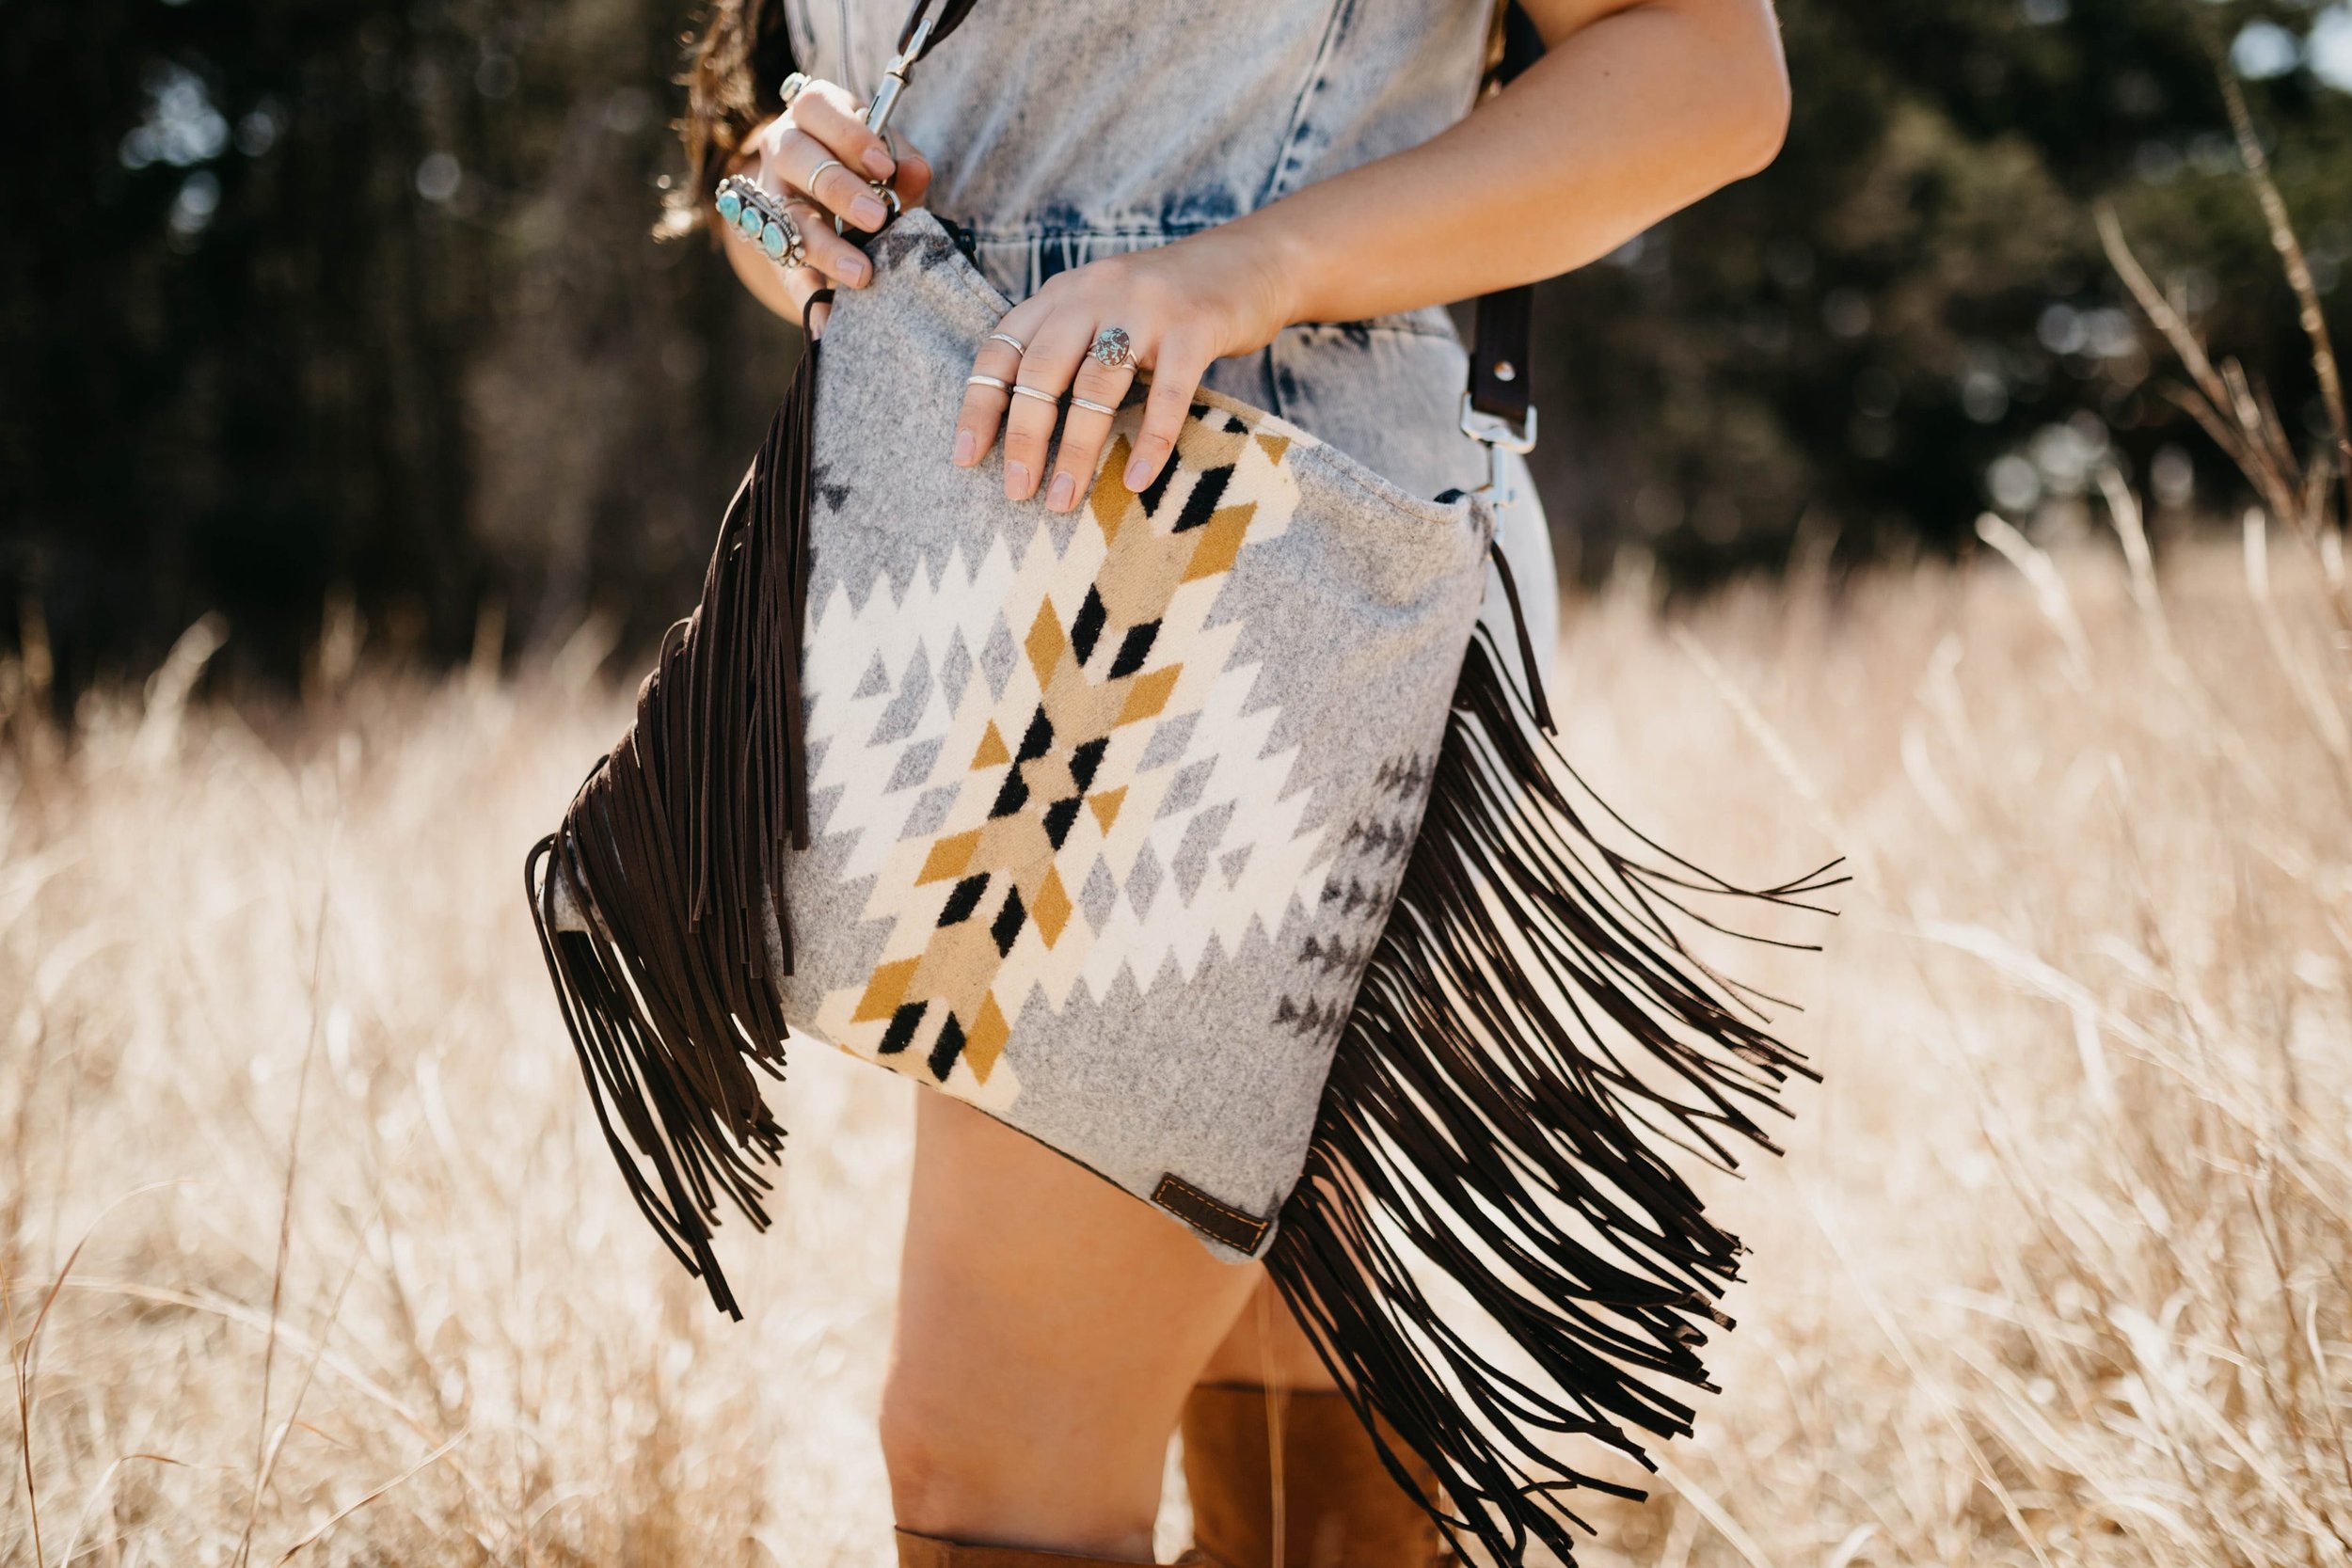 Native American Artisan Handmade Leather Fringe Purse / Crossbody Bag NWOT